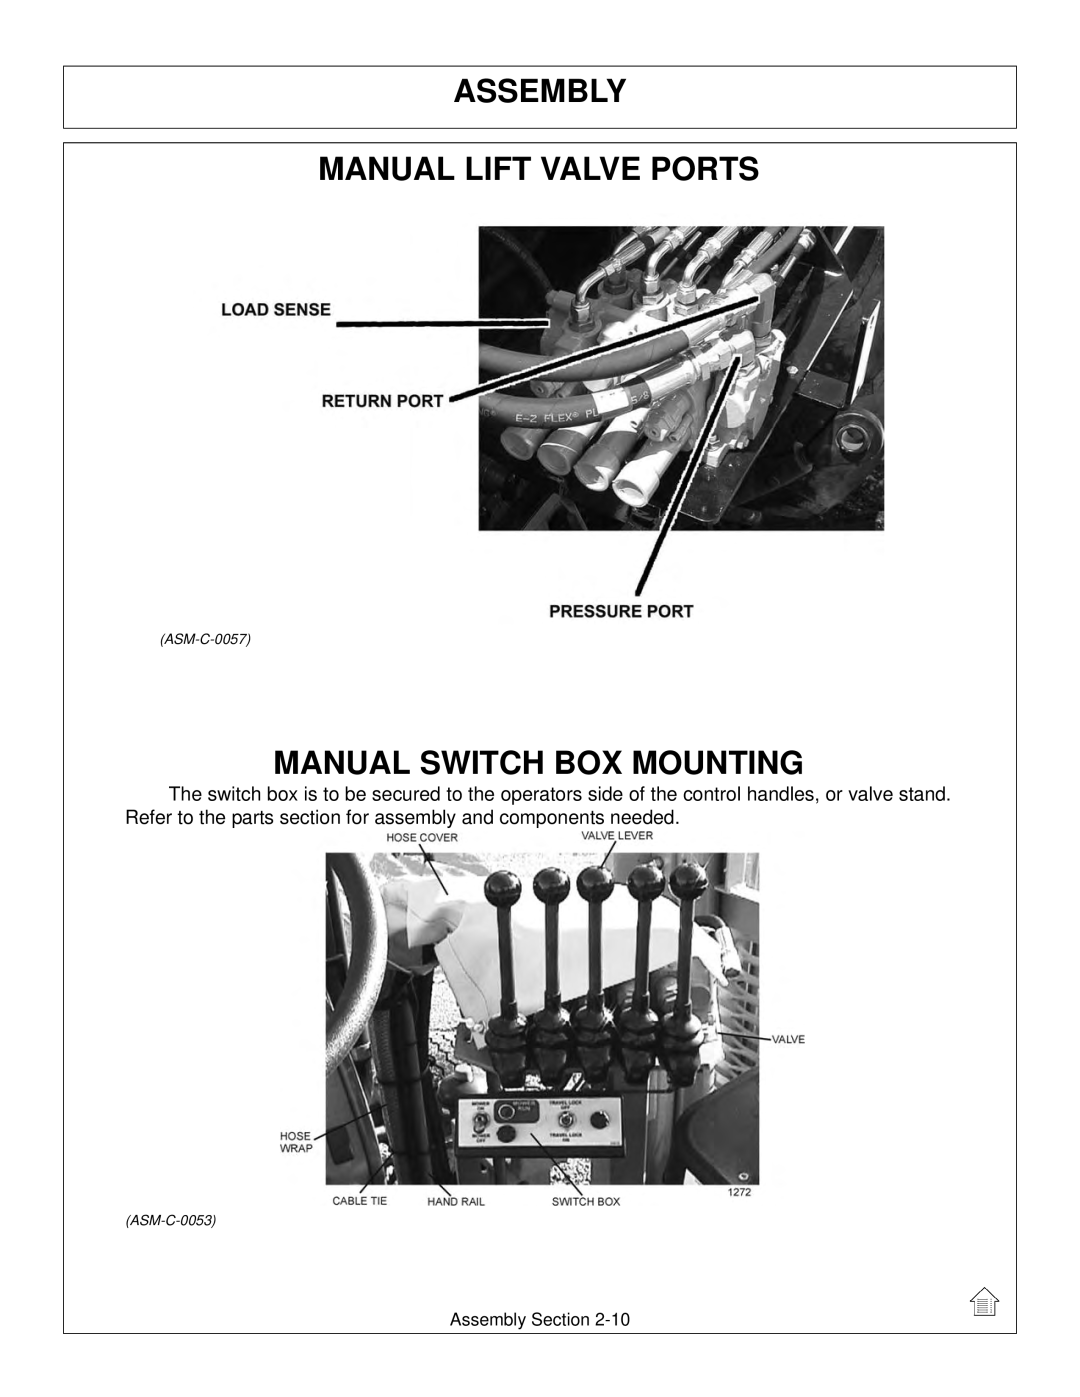 Tiger Products Co., Ltd 5083E, 5093E Assembly Manual Lift Valve Ports, Manual Switch Box Mounting, ASM-C-0057, ASM-C-0053 